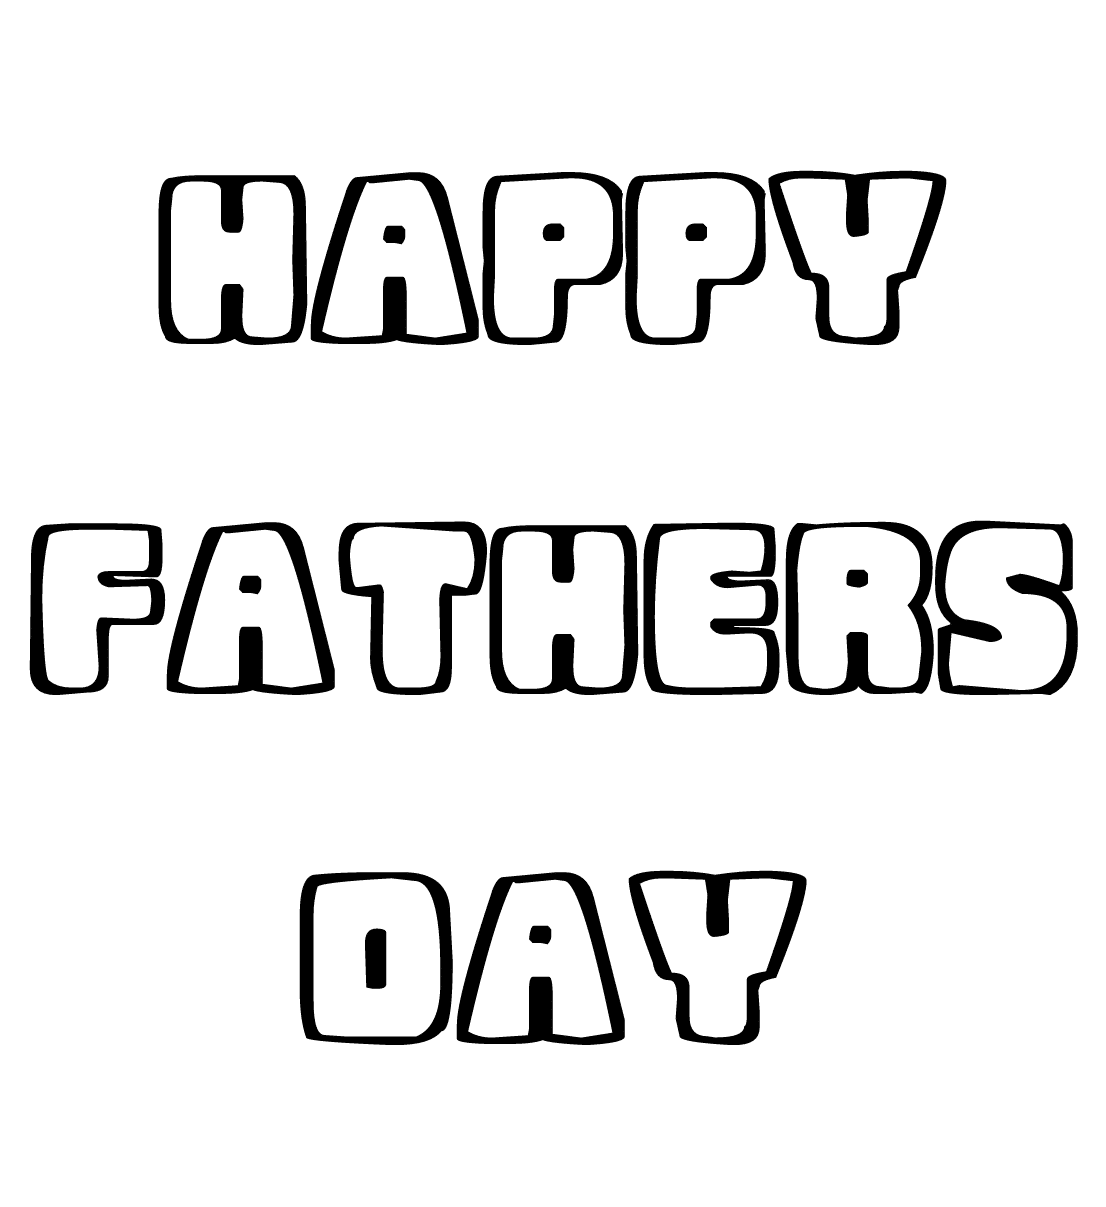 Father’s day sticker